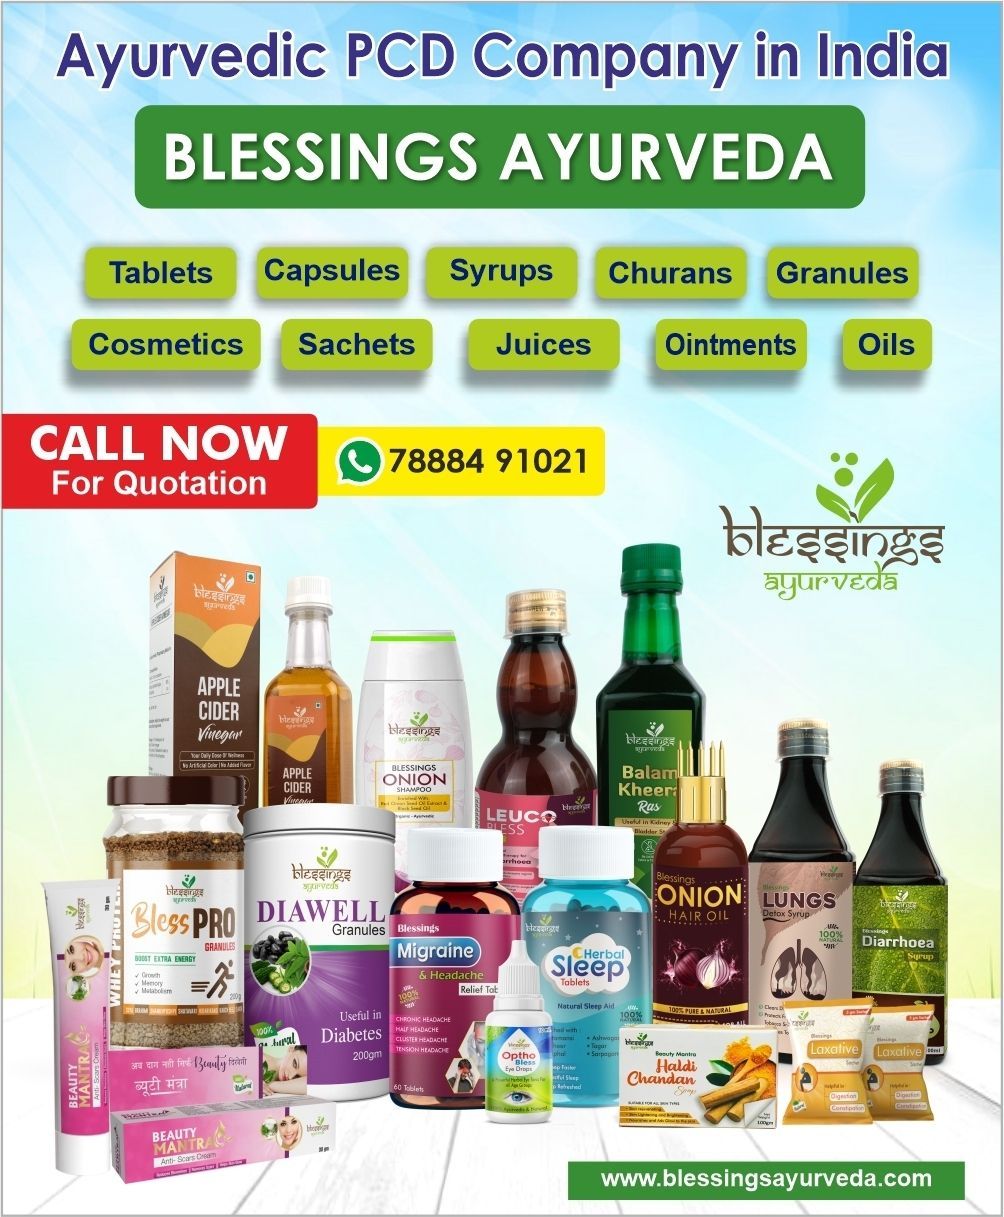 Ayurvedic PCD Company in India - Blessings ayurveda